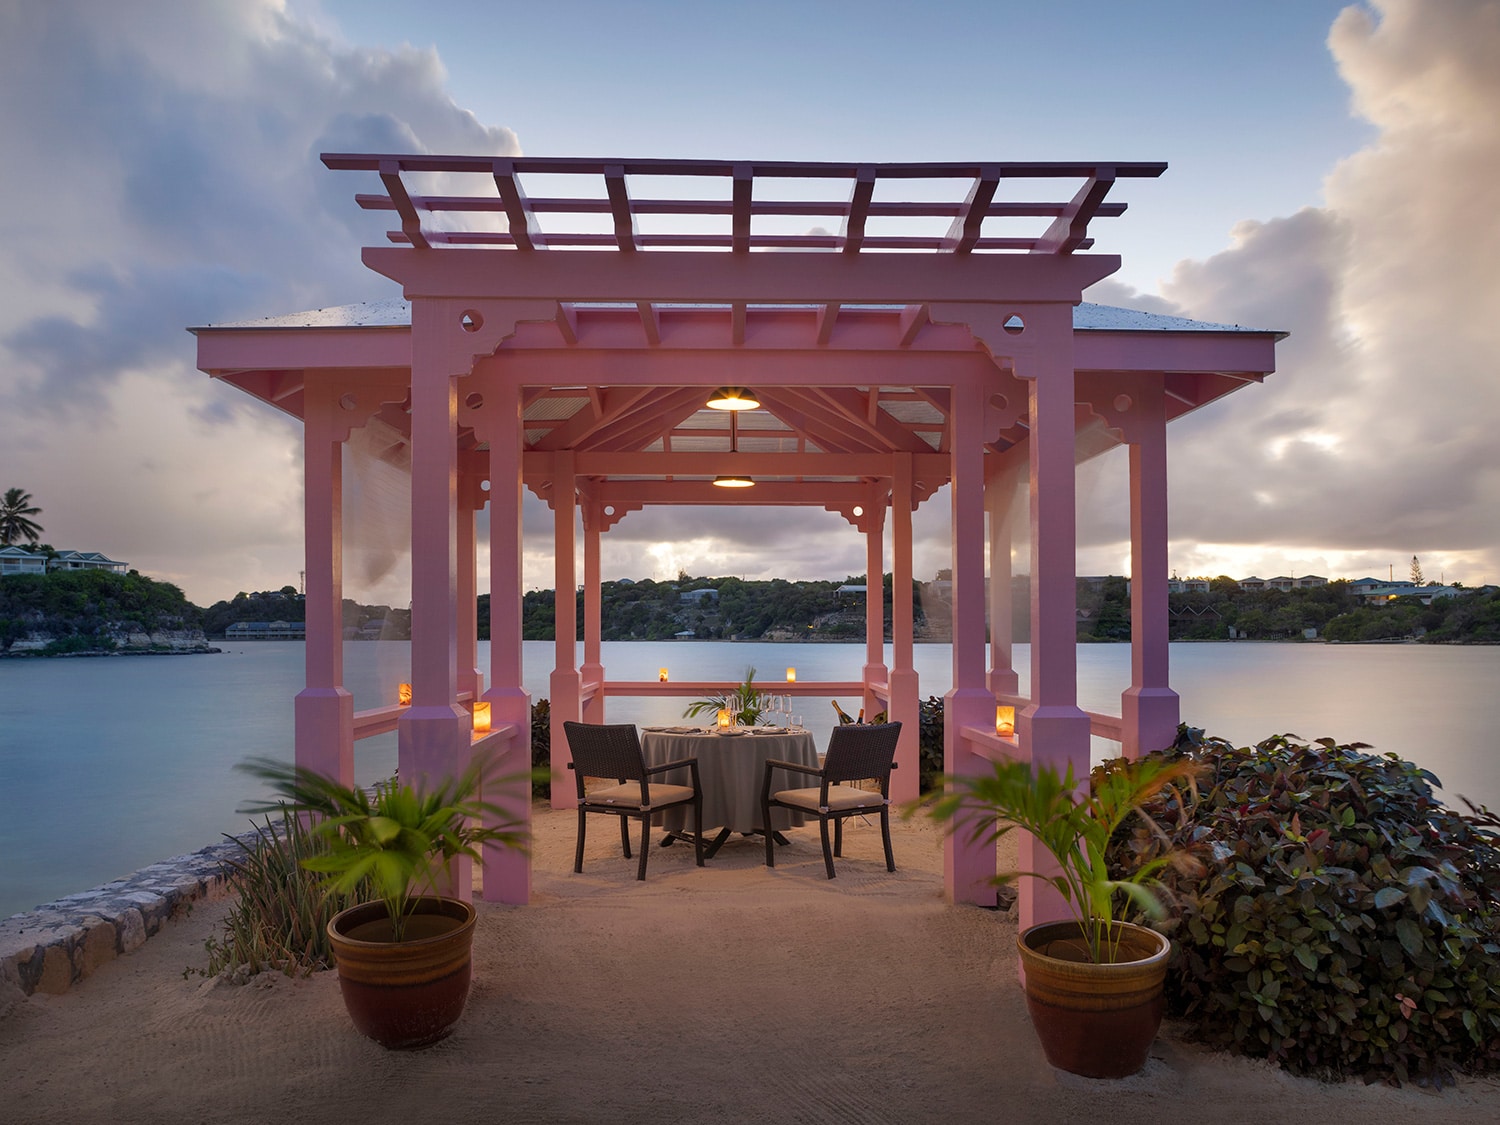 The romantic Pink Gazebo dining setting at the Hammock Cove resort on the Caribbean island of Antigua.